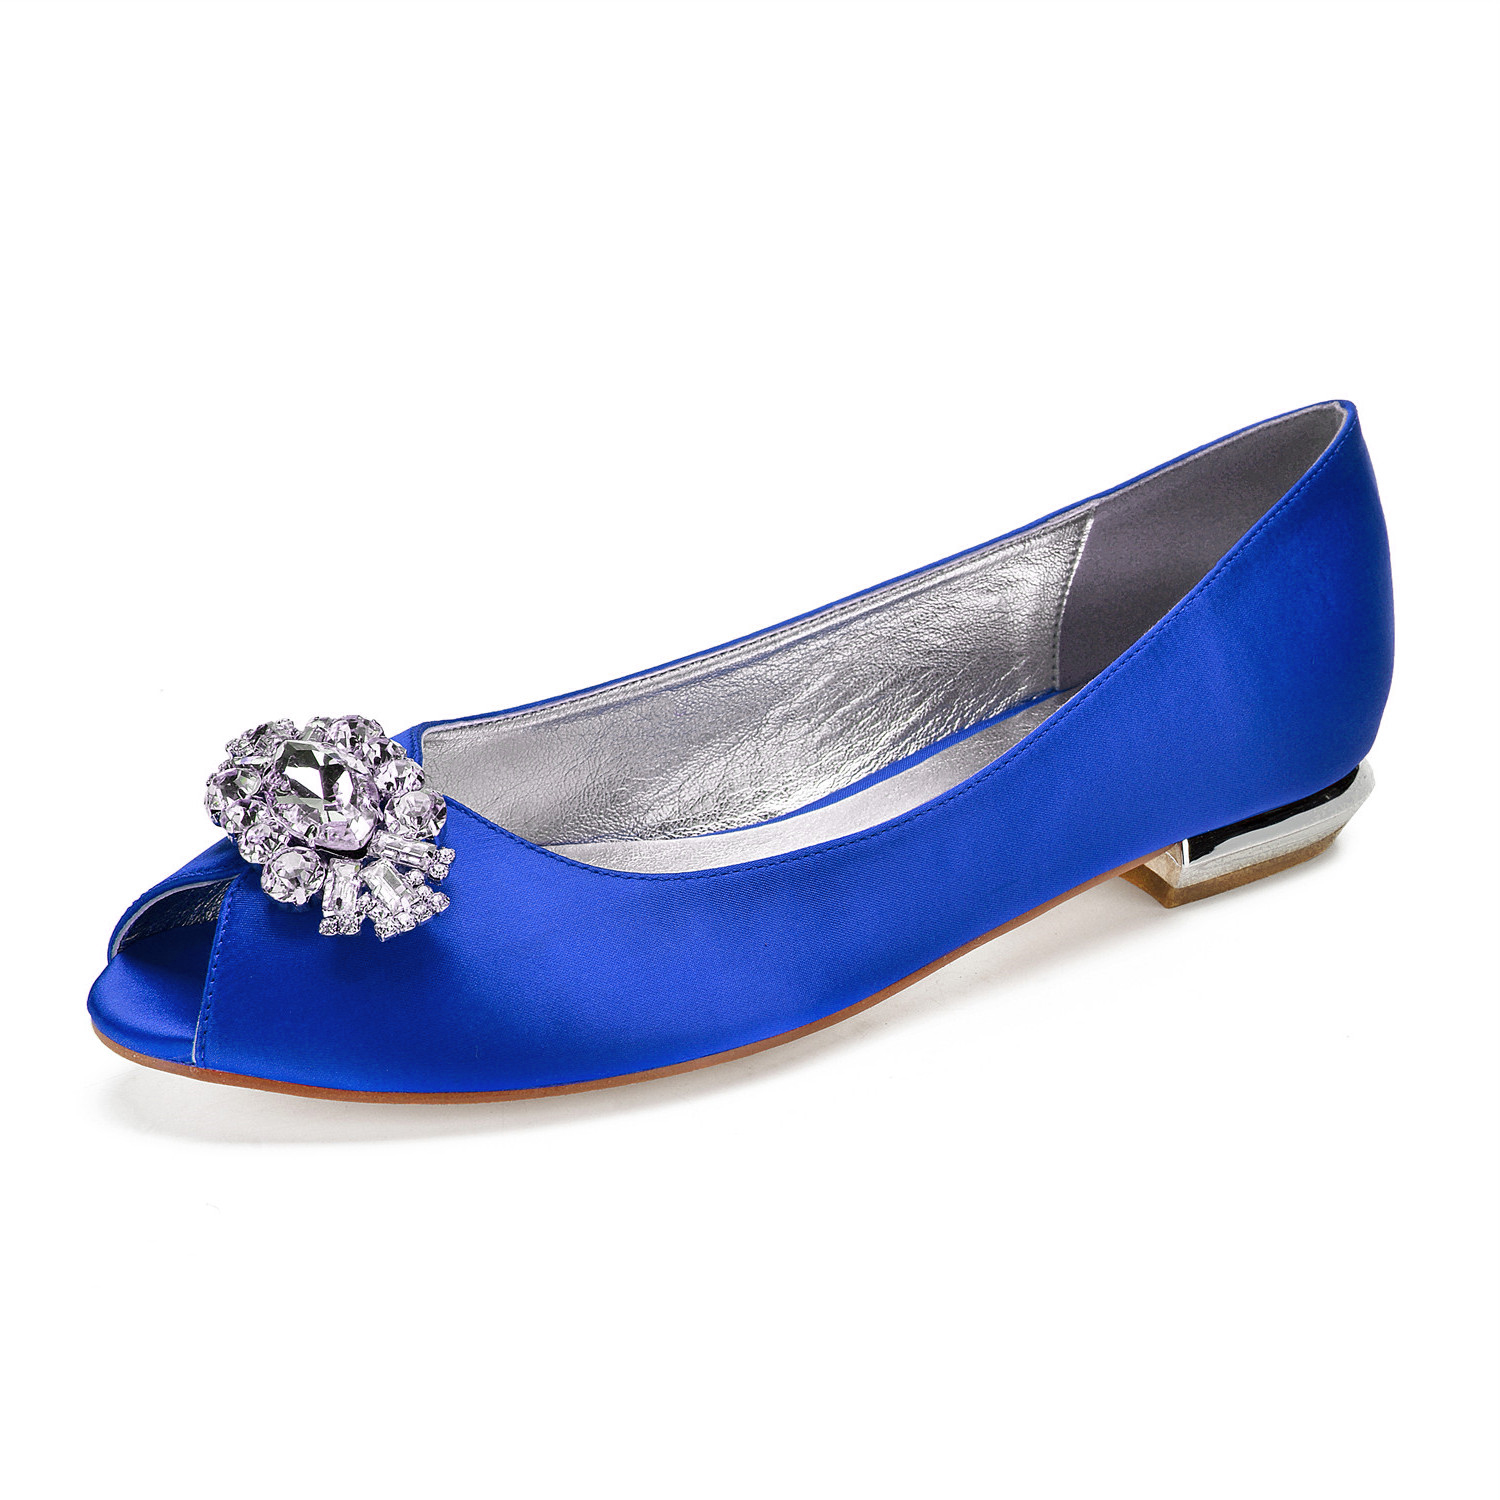 Creativesugar lady block heel flats open toe slip on evening dress shoes oval crystal brooch bridal wedding party prom ball flat